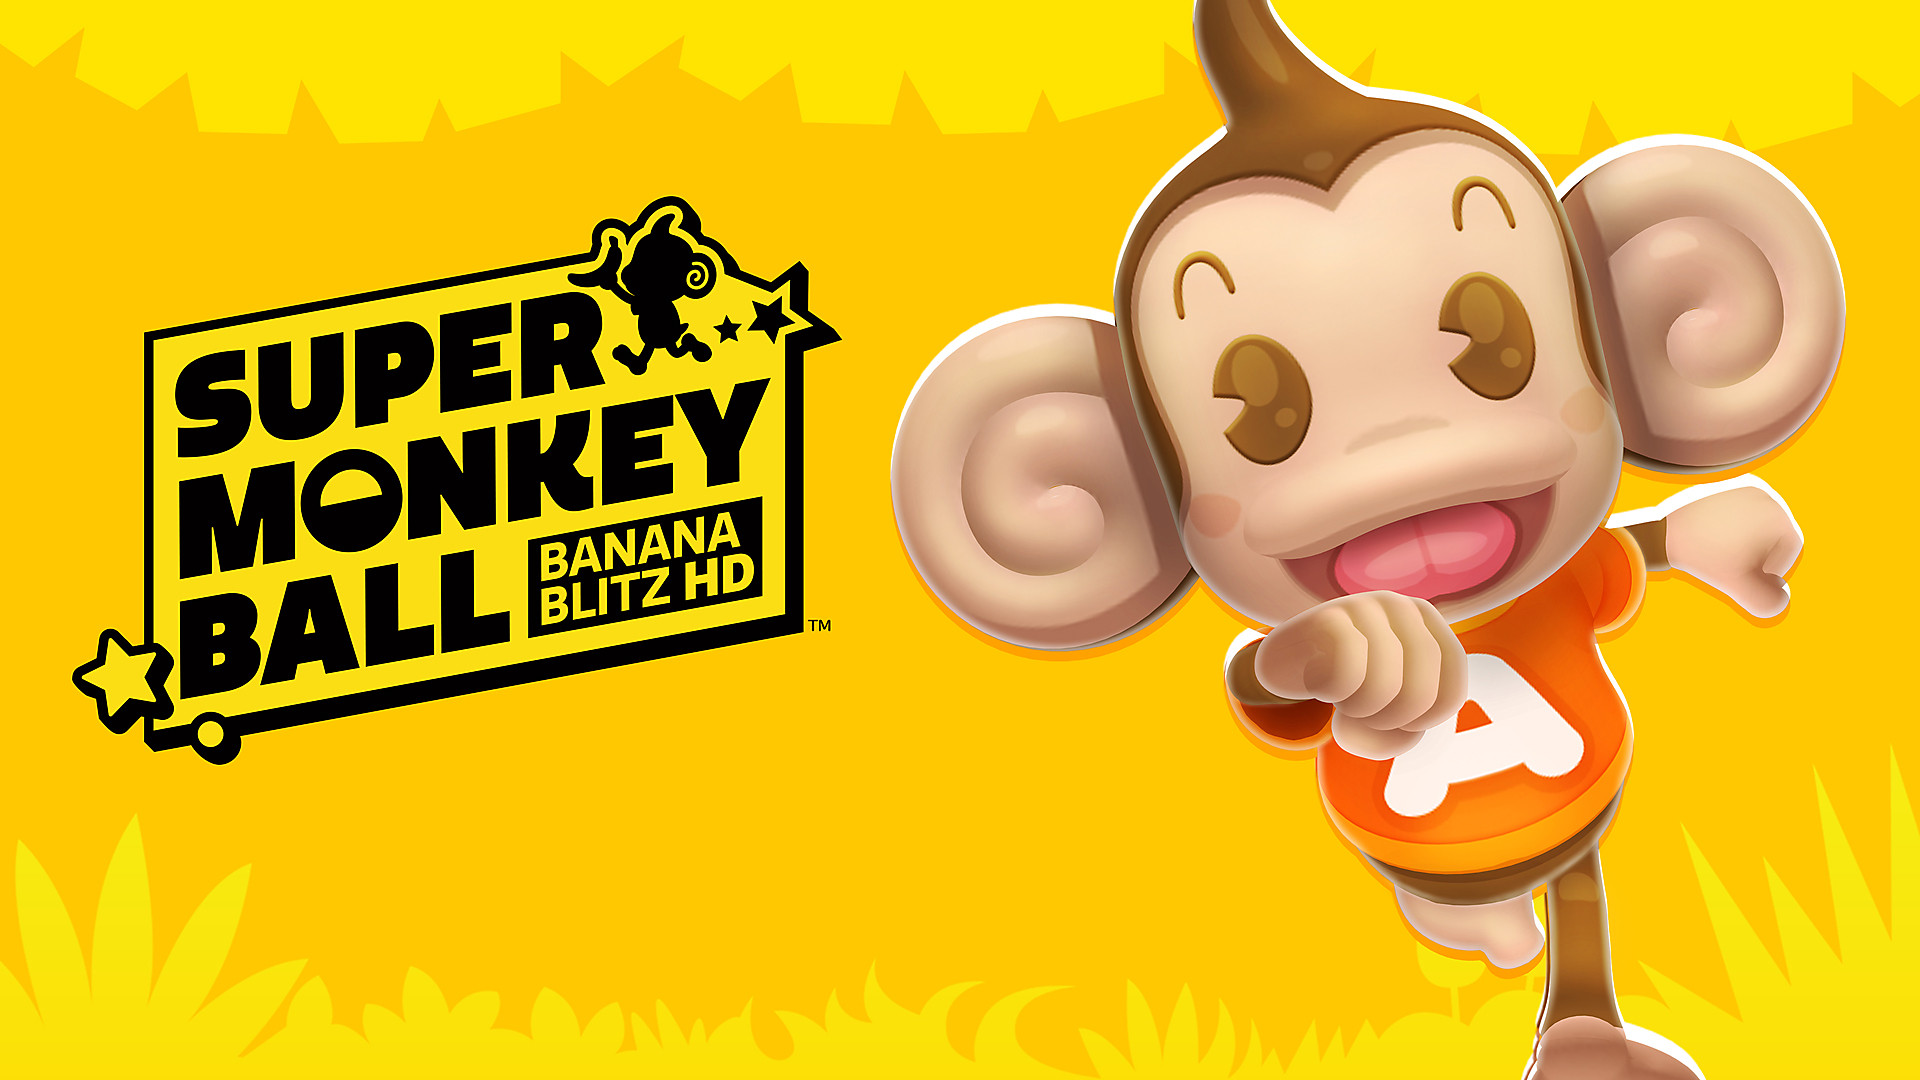 Super monkey ball banana. Super Monkey Ball. Super Monkey Ball: Banana Blitz. Super macloid Ball Banana Blitz. Super Monkey Ball Banana Blitz Mini.